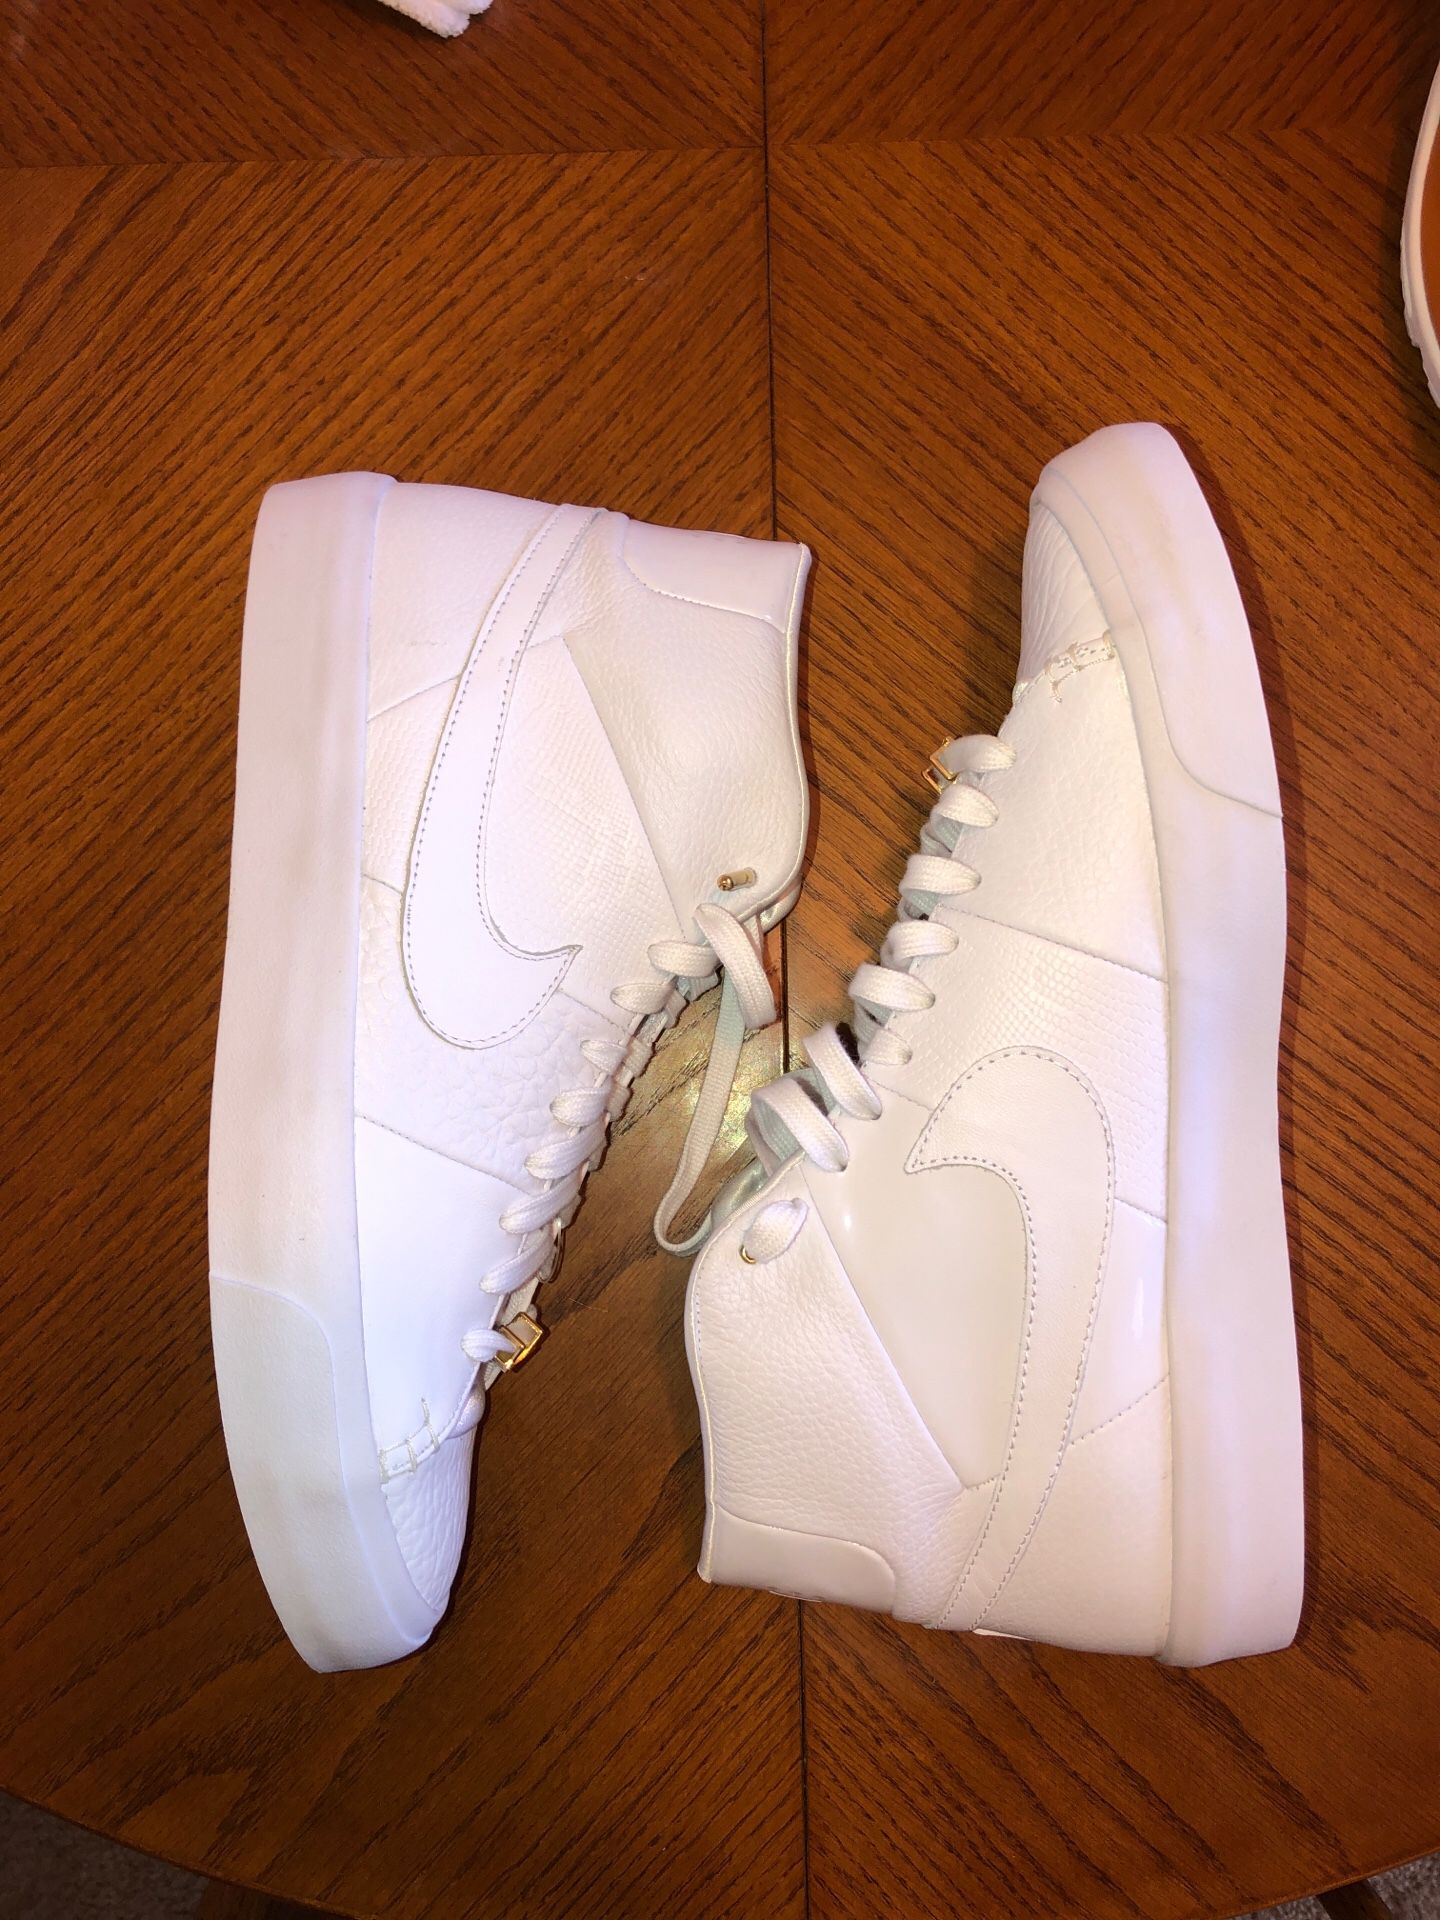 Unworn Nike Blazer Mid QS size 11.5 men’s white shoes